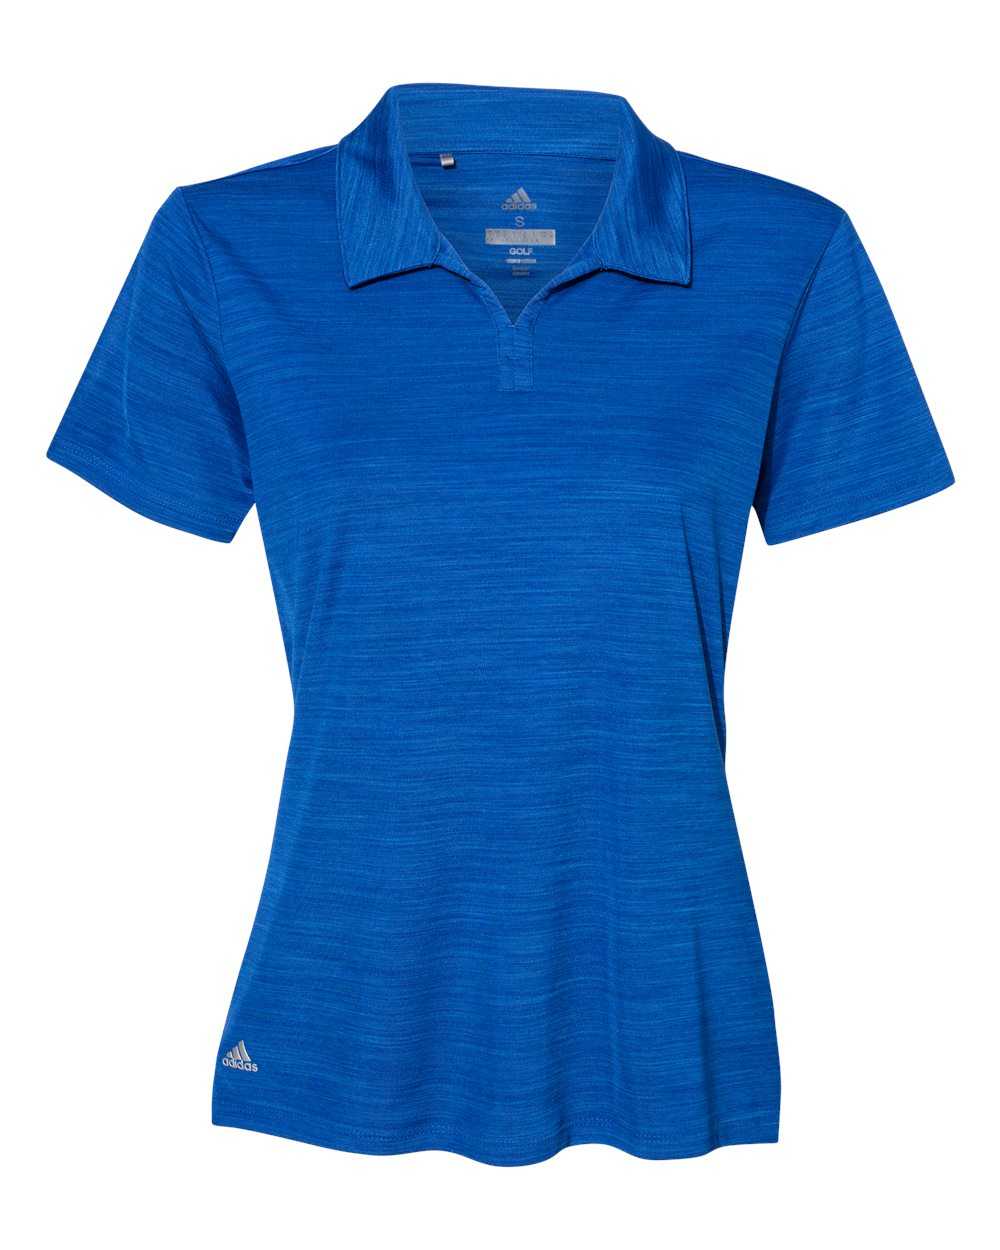 strijd Stoutmoedig cabine Adidas A403 Women's M??lange Sport Shirt - Collegiate Royal Melange